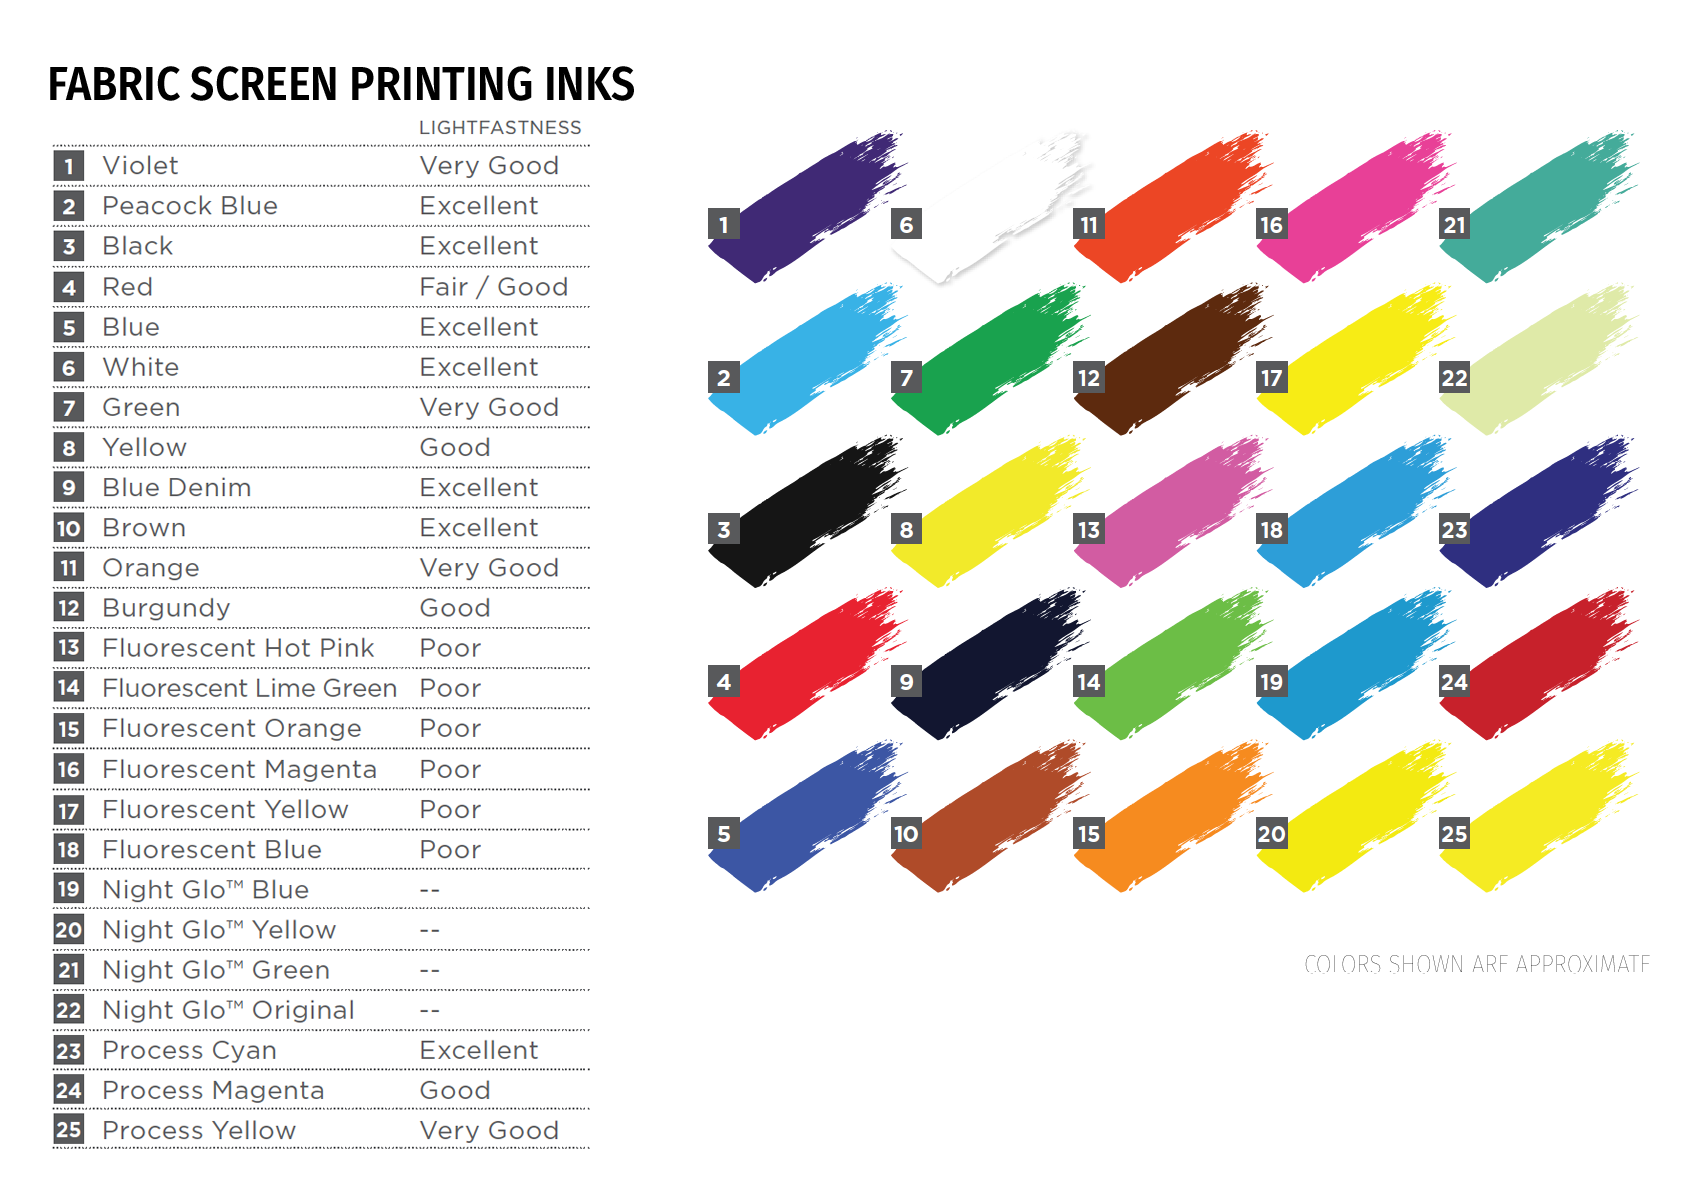 Speedball Fabric Screen Printing Ink Set, 4 oz. Bottles - Energy Surge -  21619339